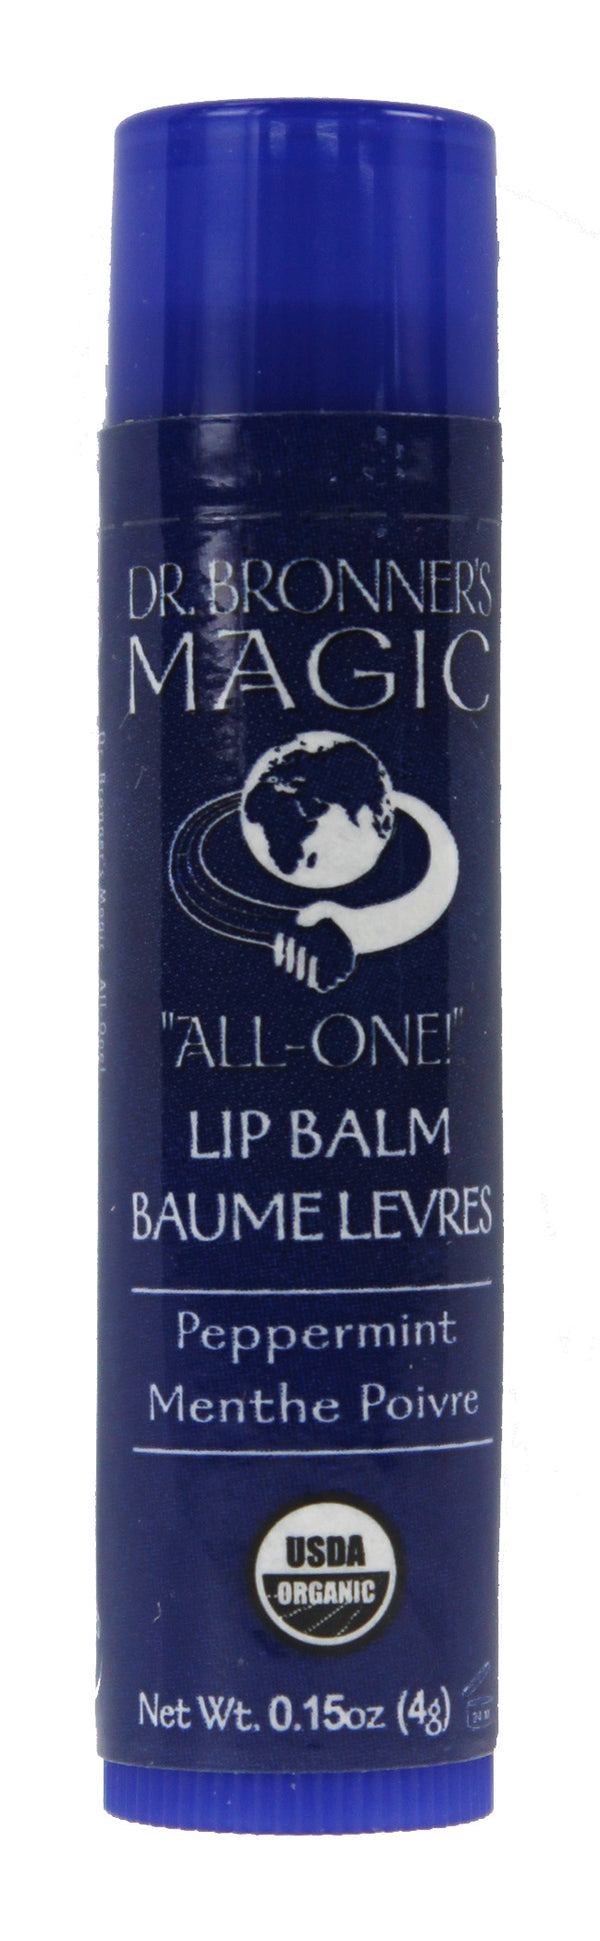 Dr. Bronner's Magic Soap - Peppermint Lip Balm